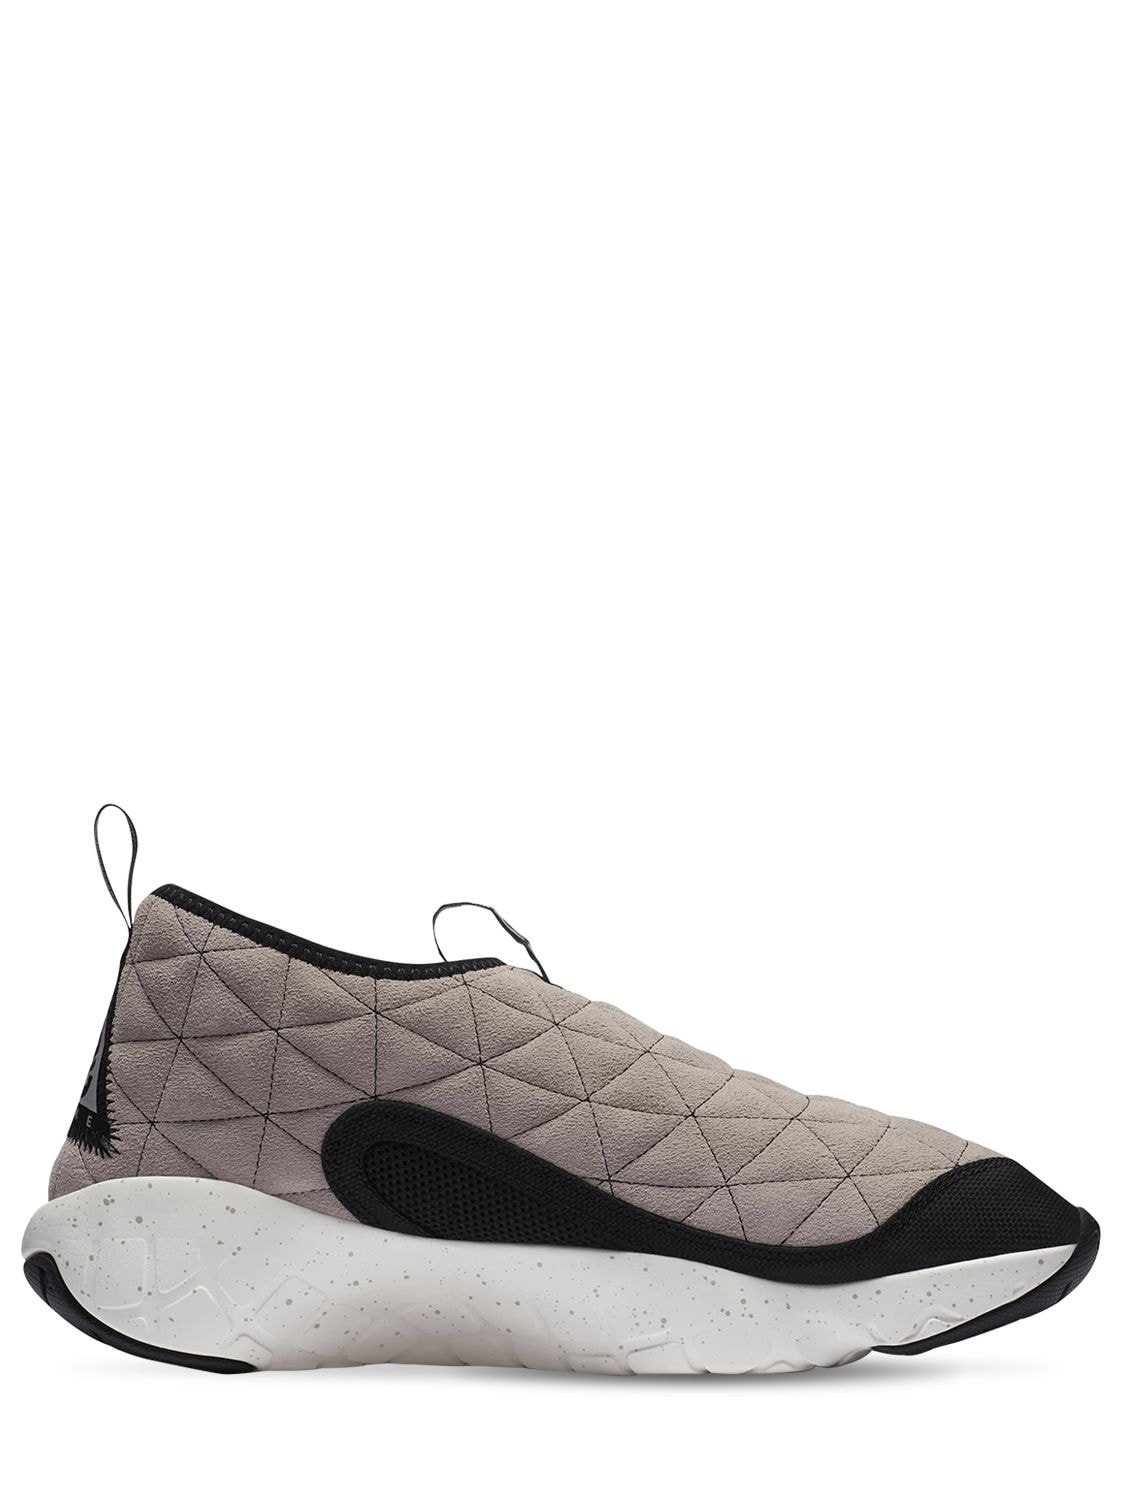 Nike Acg Moc 3.0 Sneakers